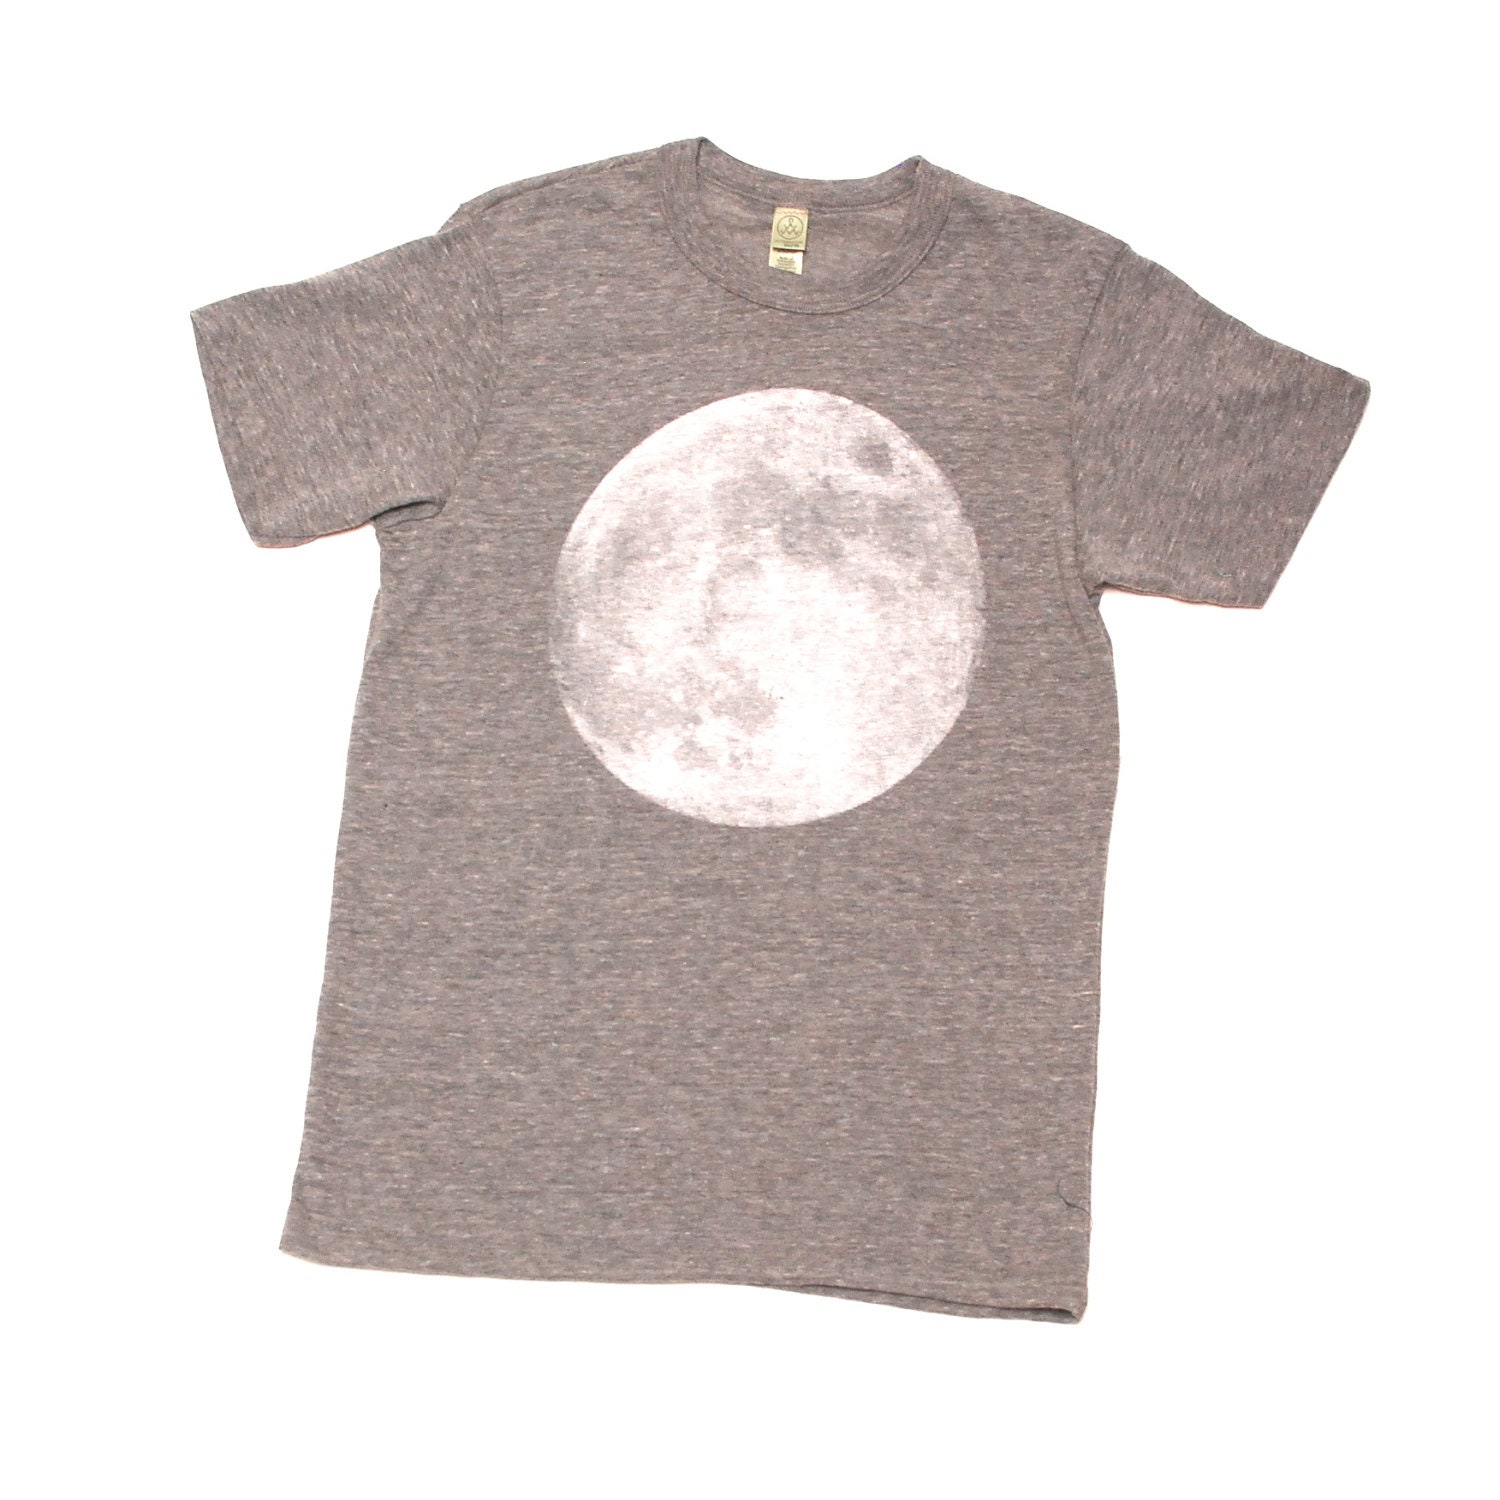 MOON heather grey SHIRT super SOFT unisex t shirt all sizes xs-xxl - TempleofCairo